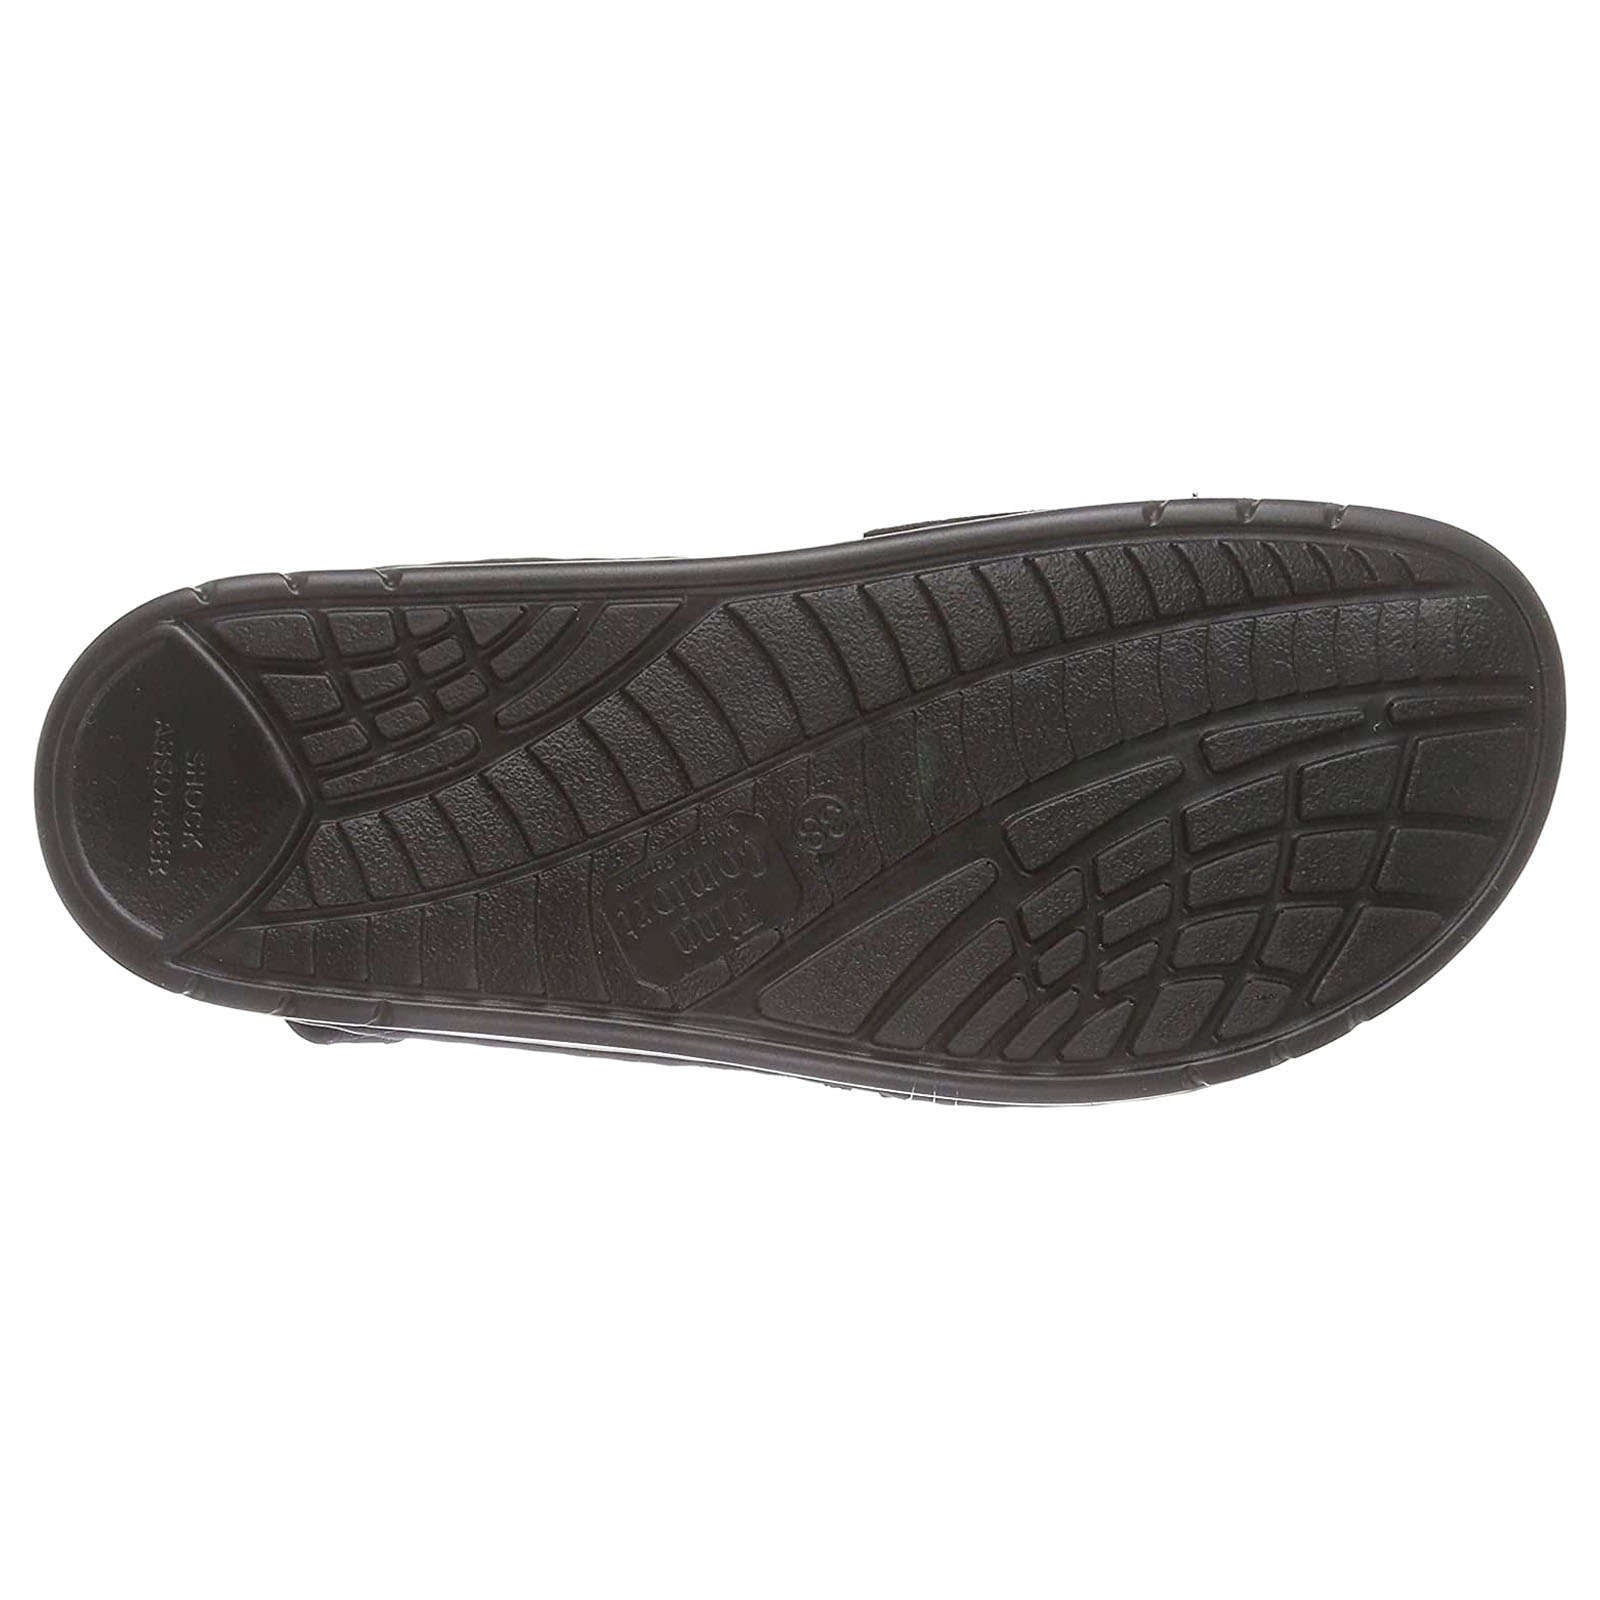 Finn Comfort Yuma Nubuck Leather Men's Casual Sandals#color_black olive